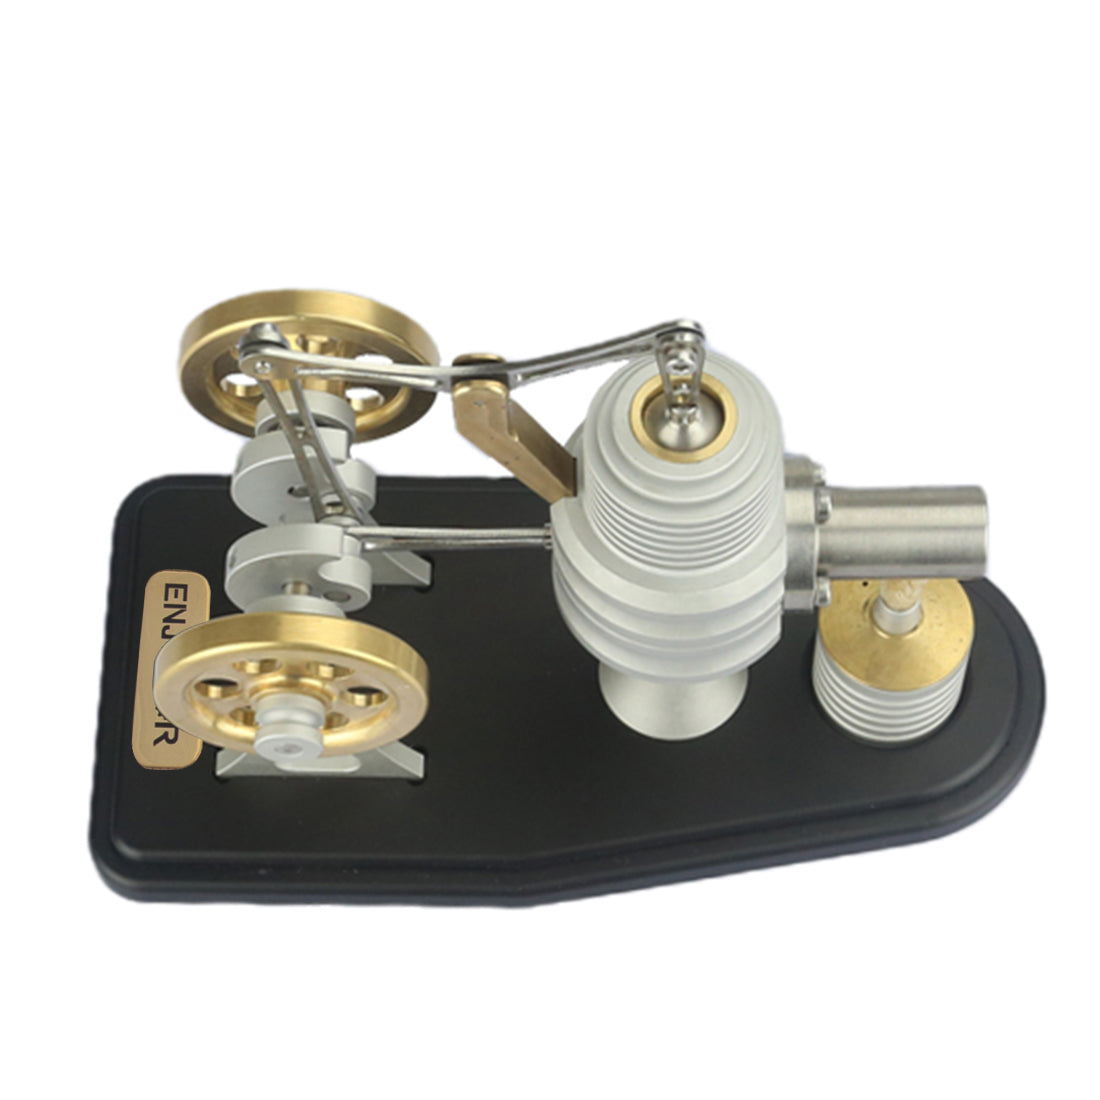 ENJOMOR Metal Balance Hot Air Stirling Engine Model Educational Toys & Gifts enginediyshop